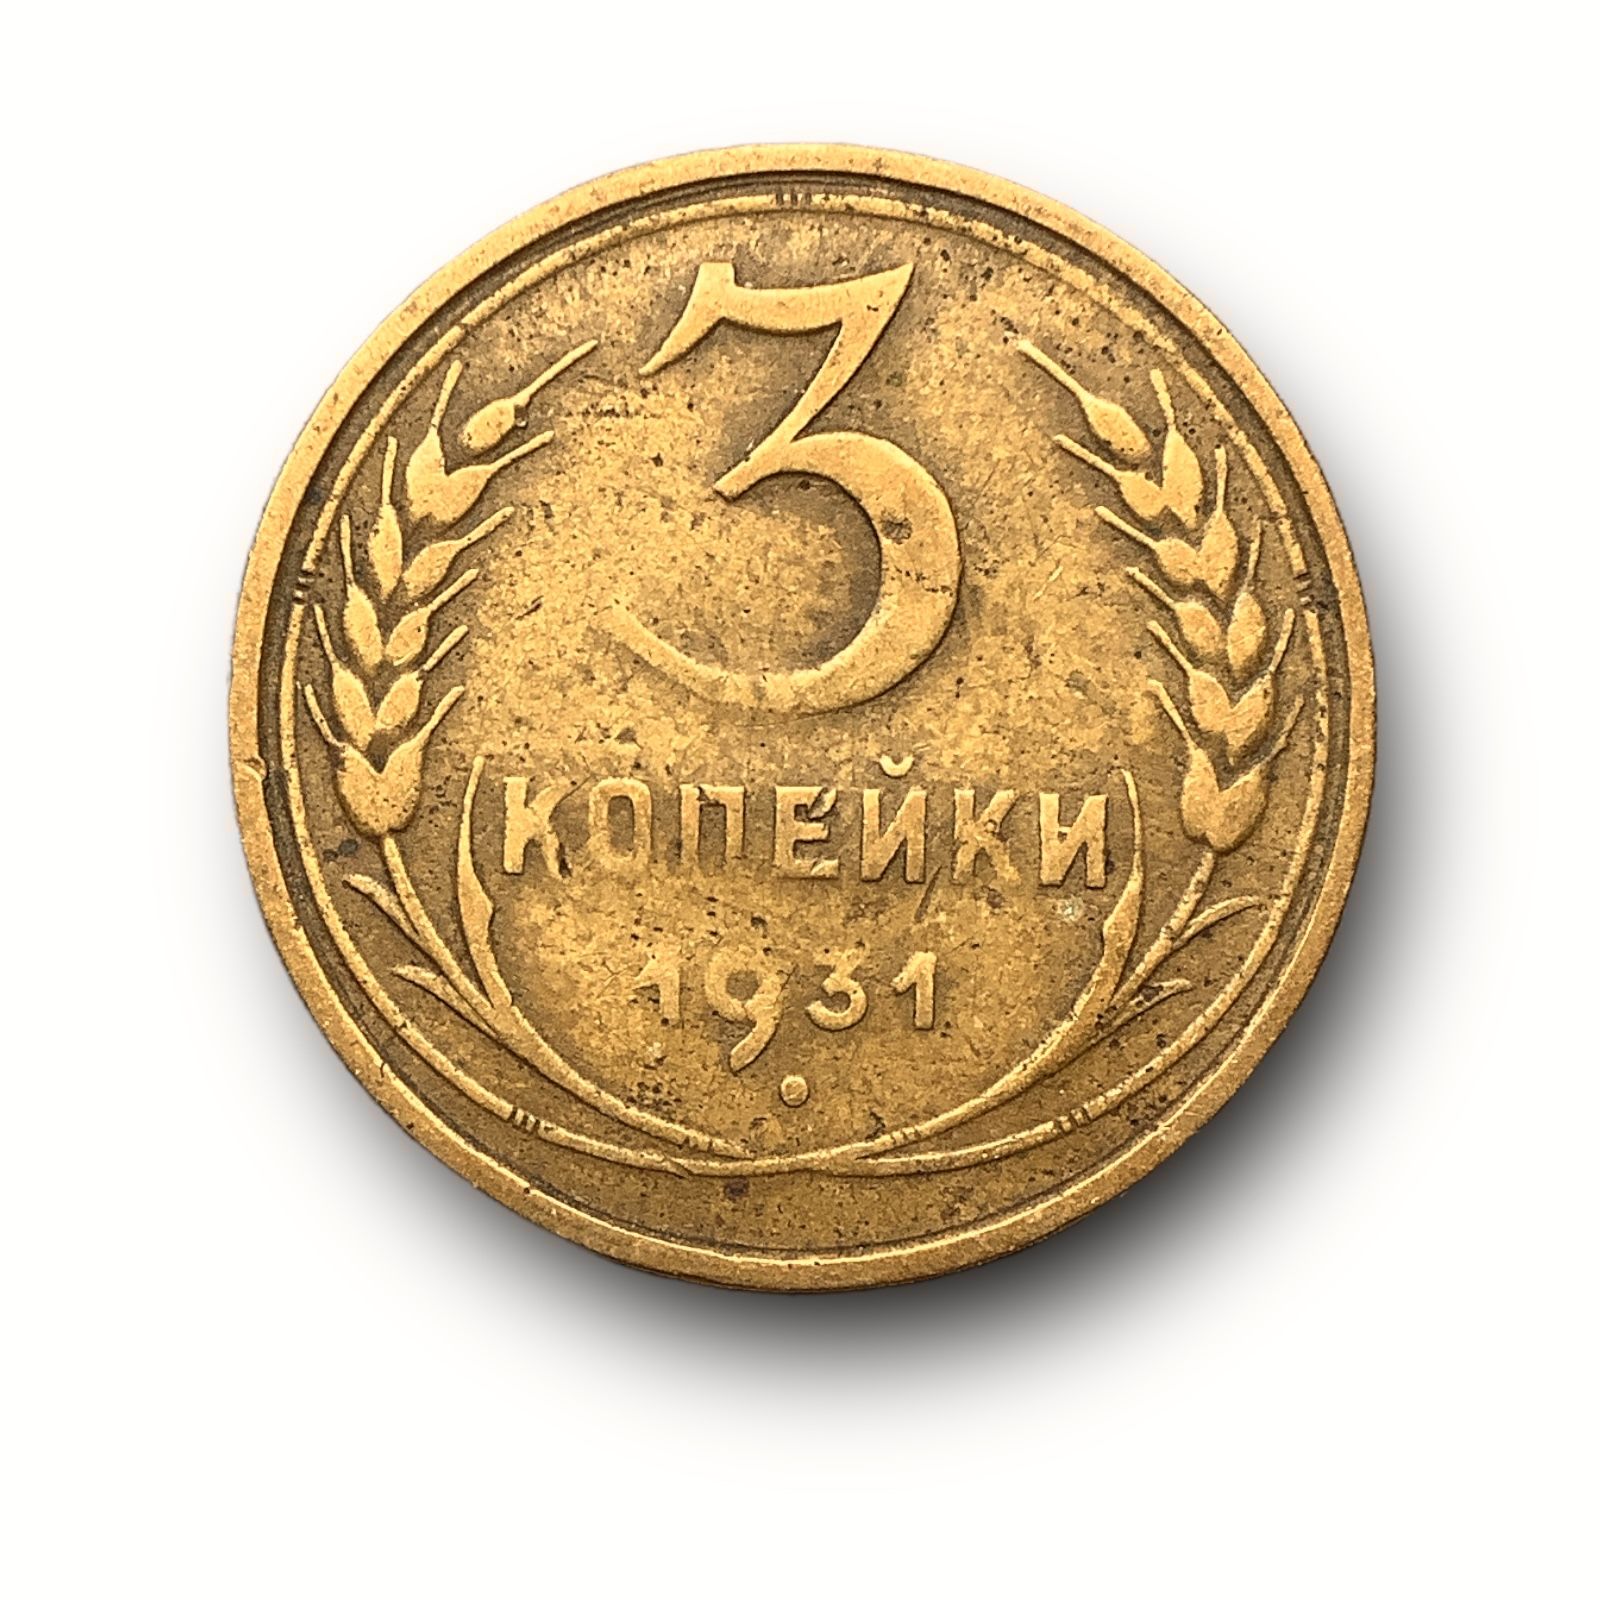 Монеты 1931 года. 5 Копеек 1931 год цена монеты. СССР 3 копейки 1931 год - XF. 3 Копейки 1931 год (выкус).